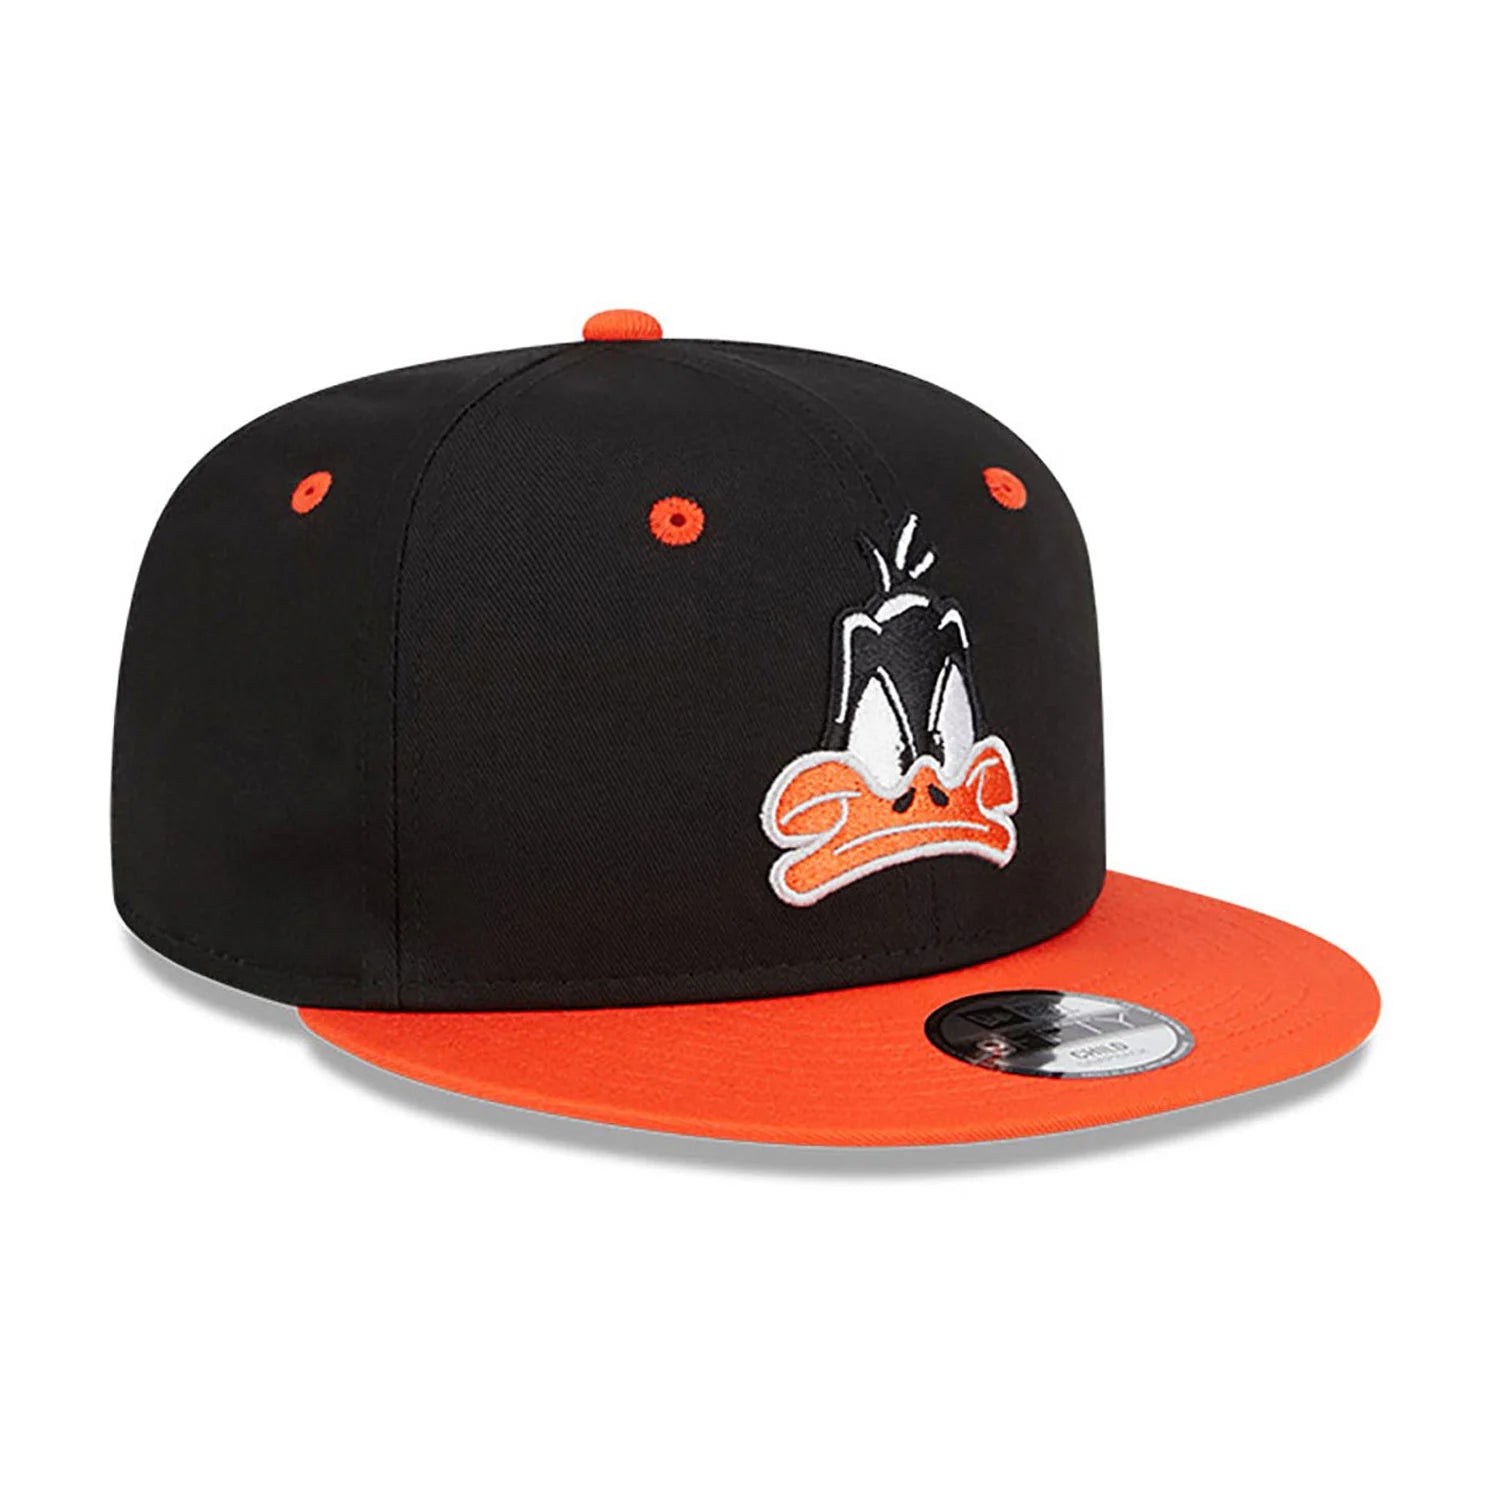 New Era Kids 9Fifty Snapback "Daffy Duck" Black/Orange (nova coleção)